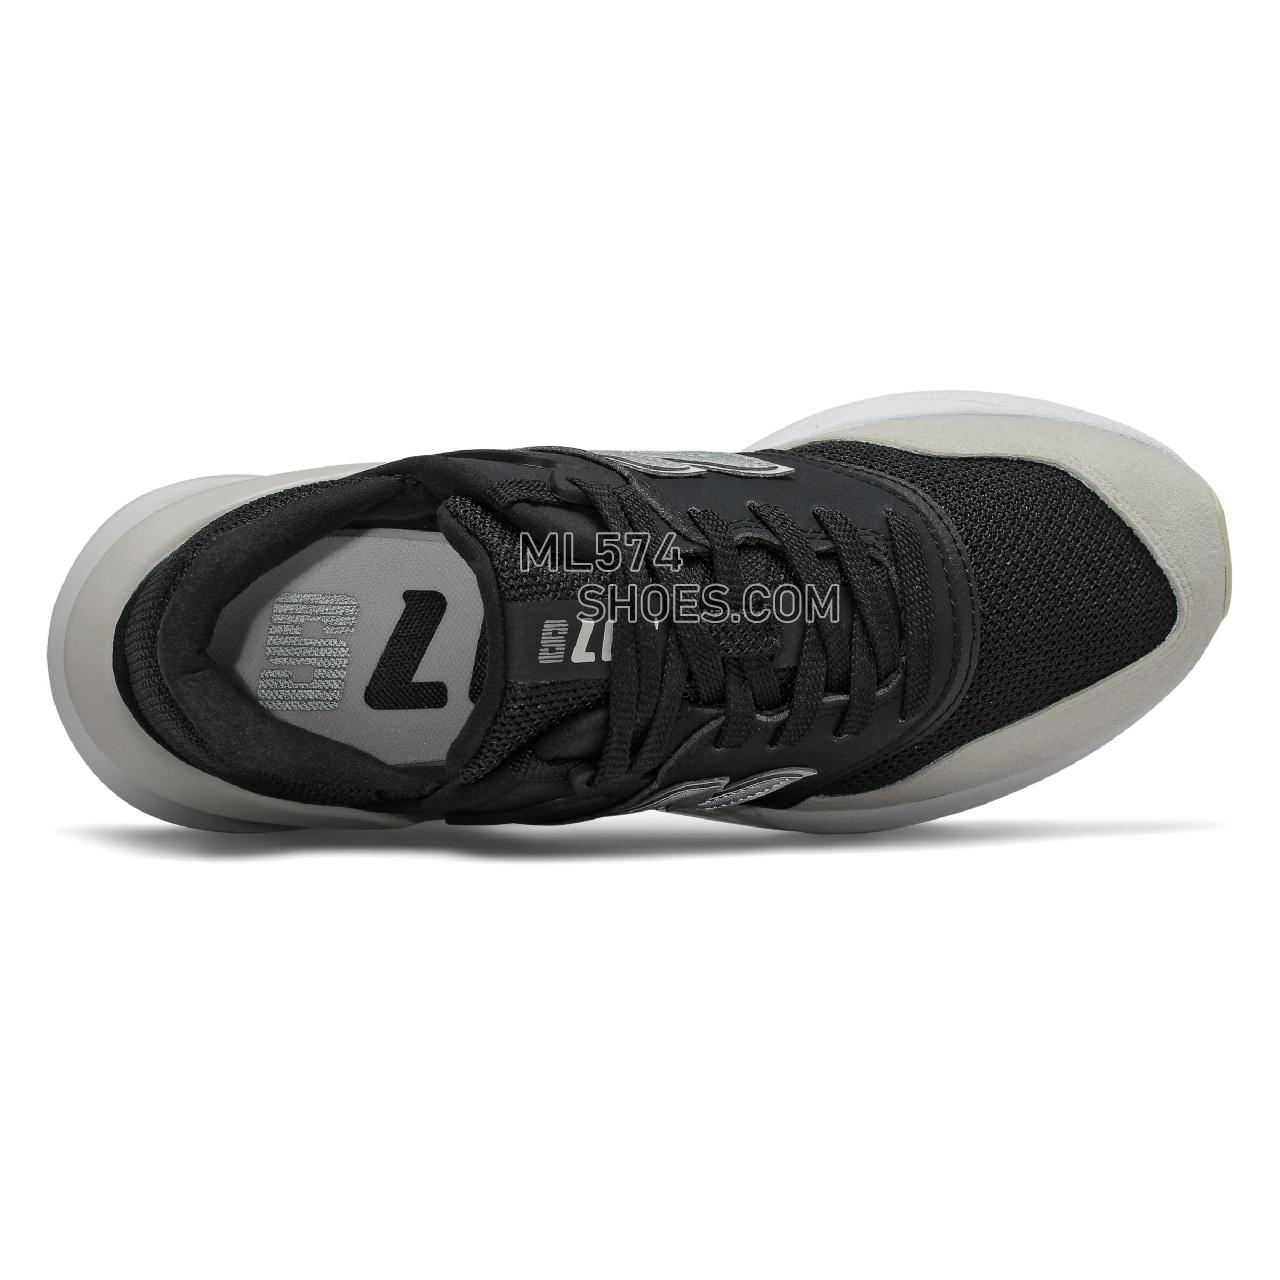 New Balance 997 Sport - Women's Sport Style Sneakers - Black with Moonbeam - WS997GFG